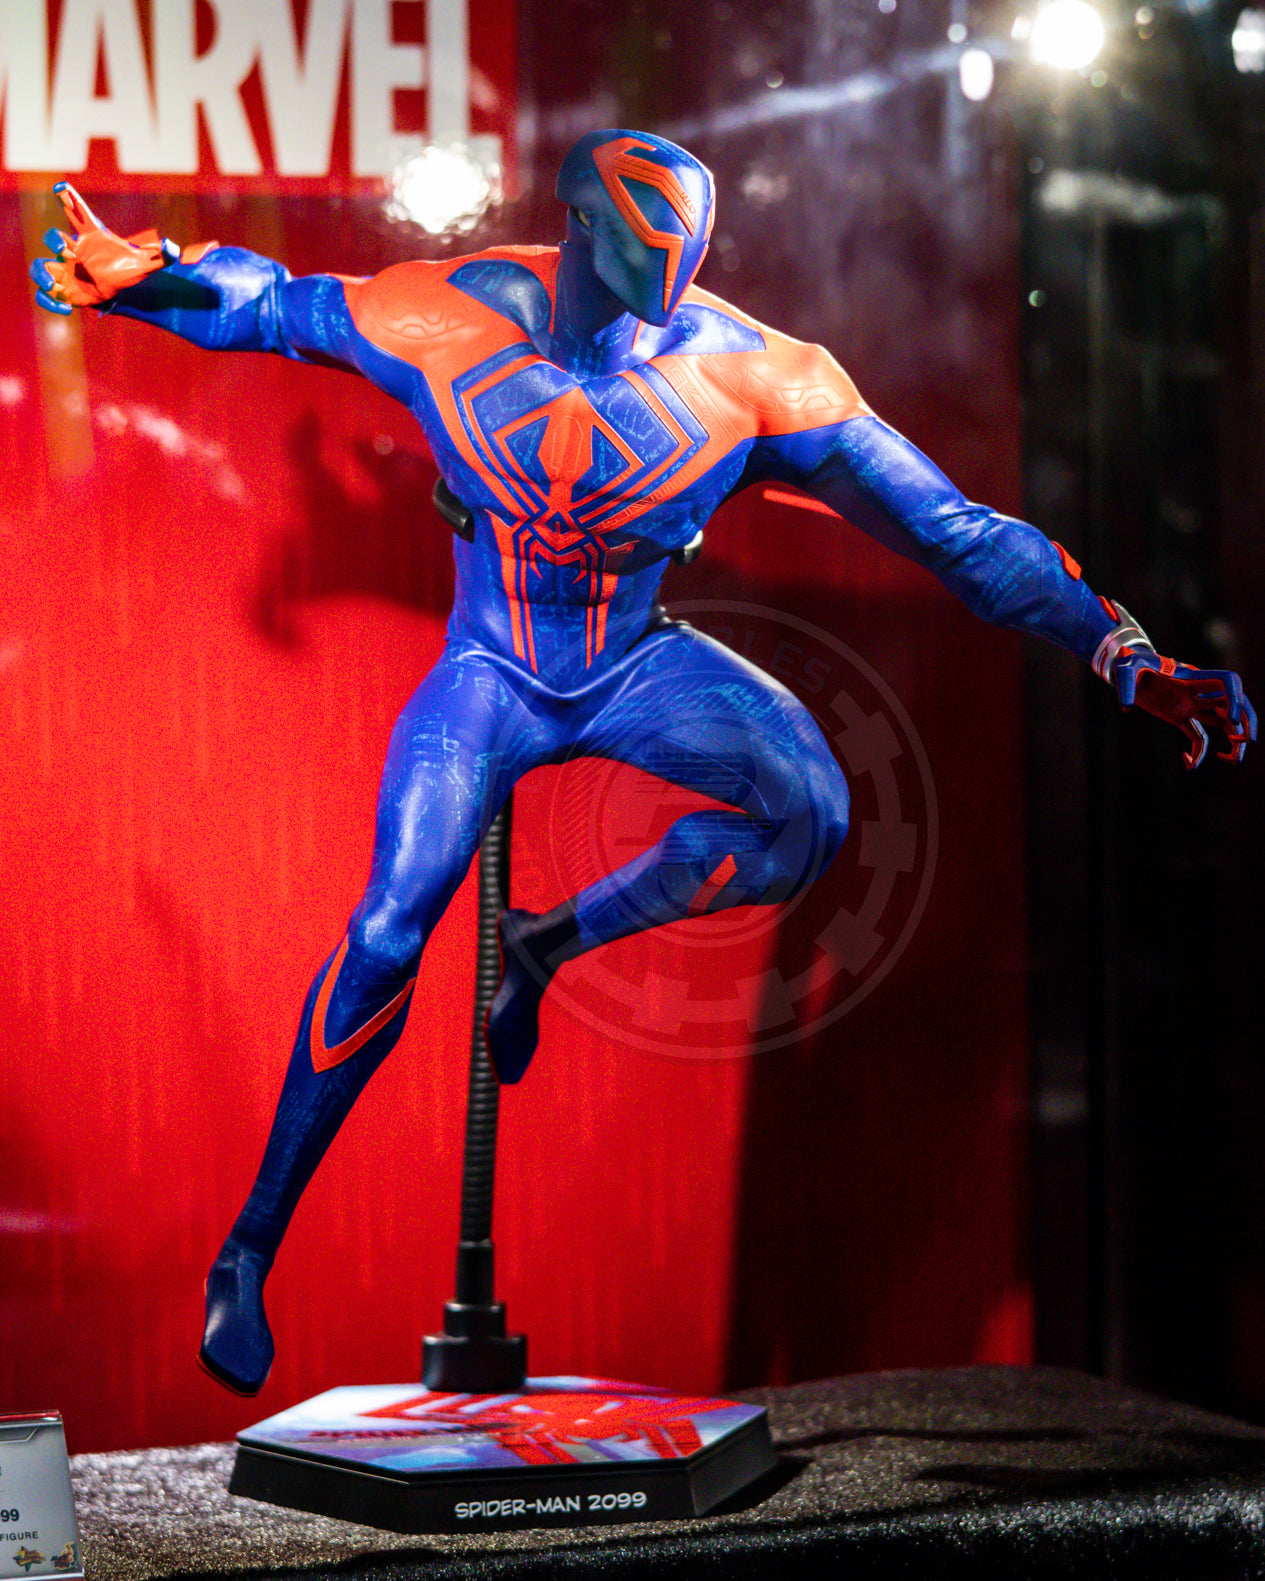 Hottoys 1/6 Vgm51 Cyborg Spider-man Suit Ht Original Genuine Collection  Model Marvel Comics Anime Figure Action Toys - Action Figures - AliExpress